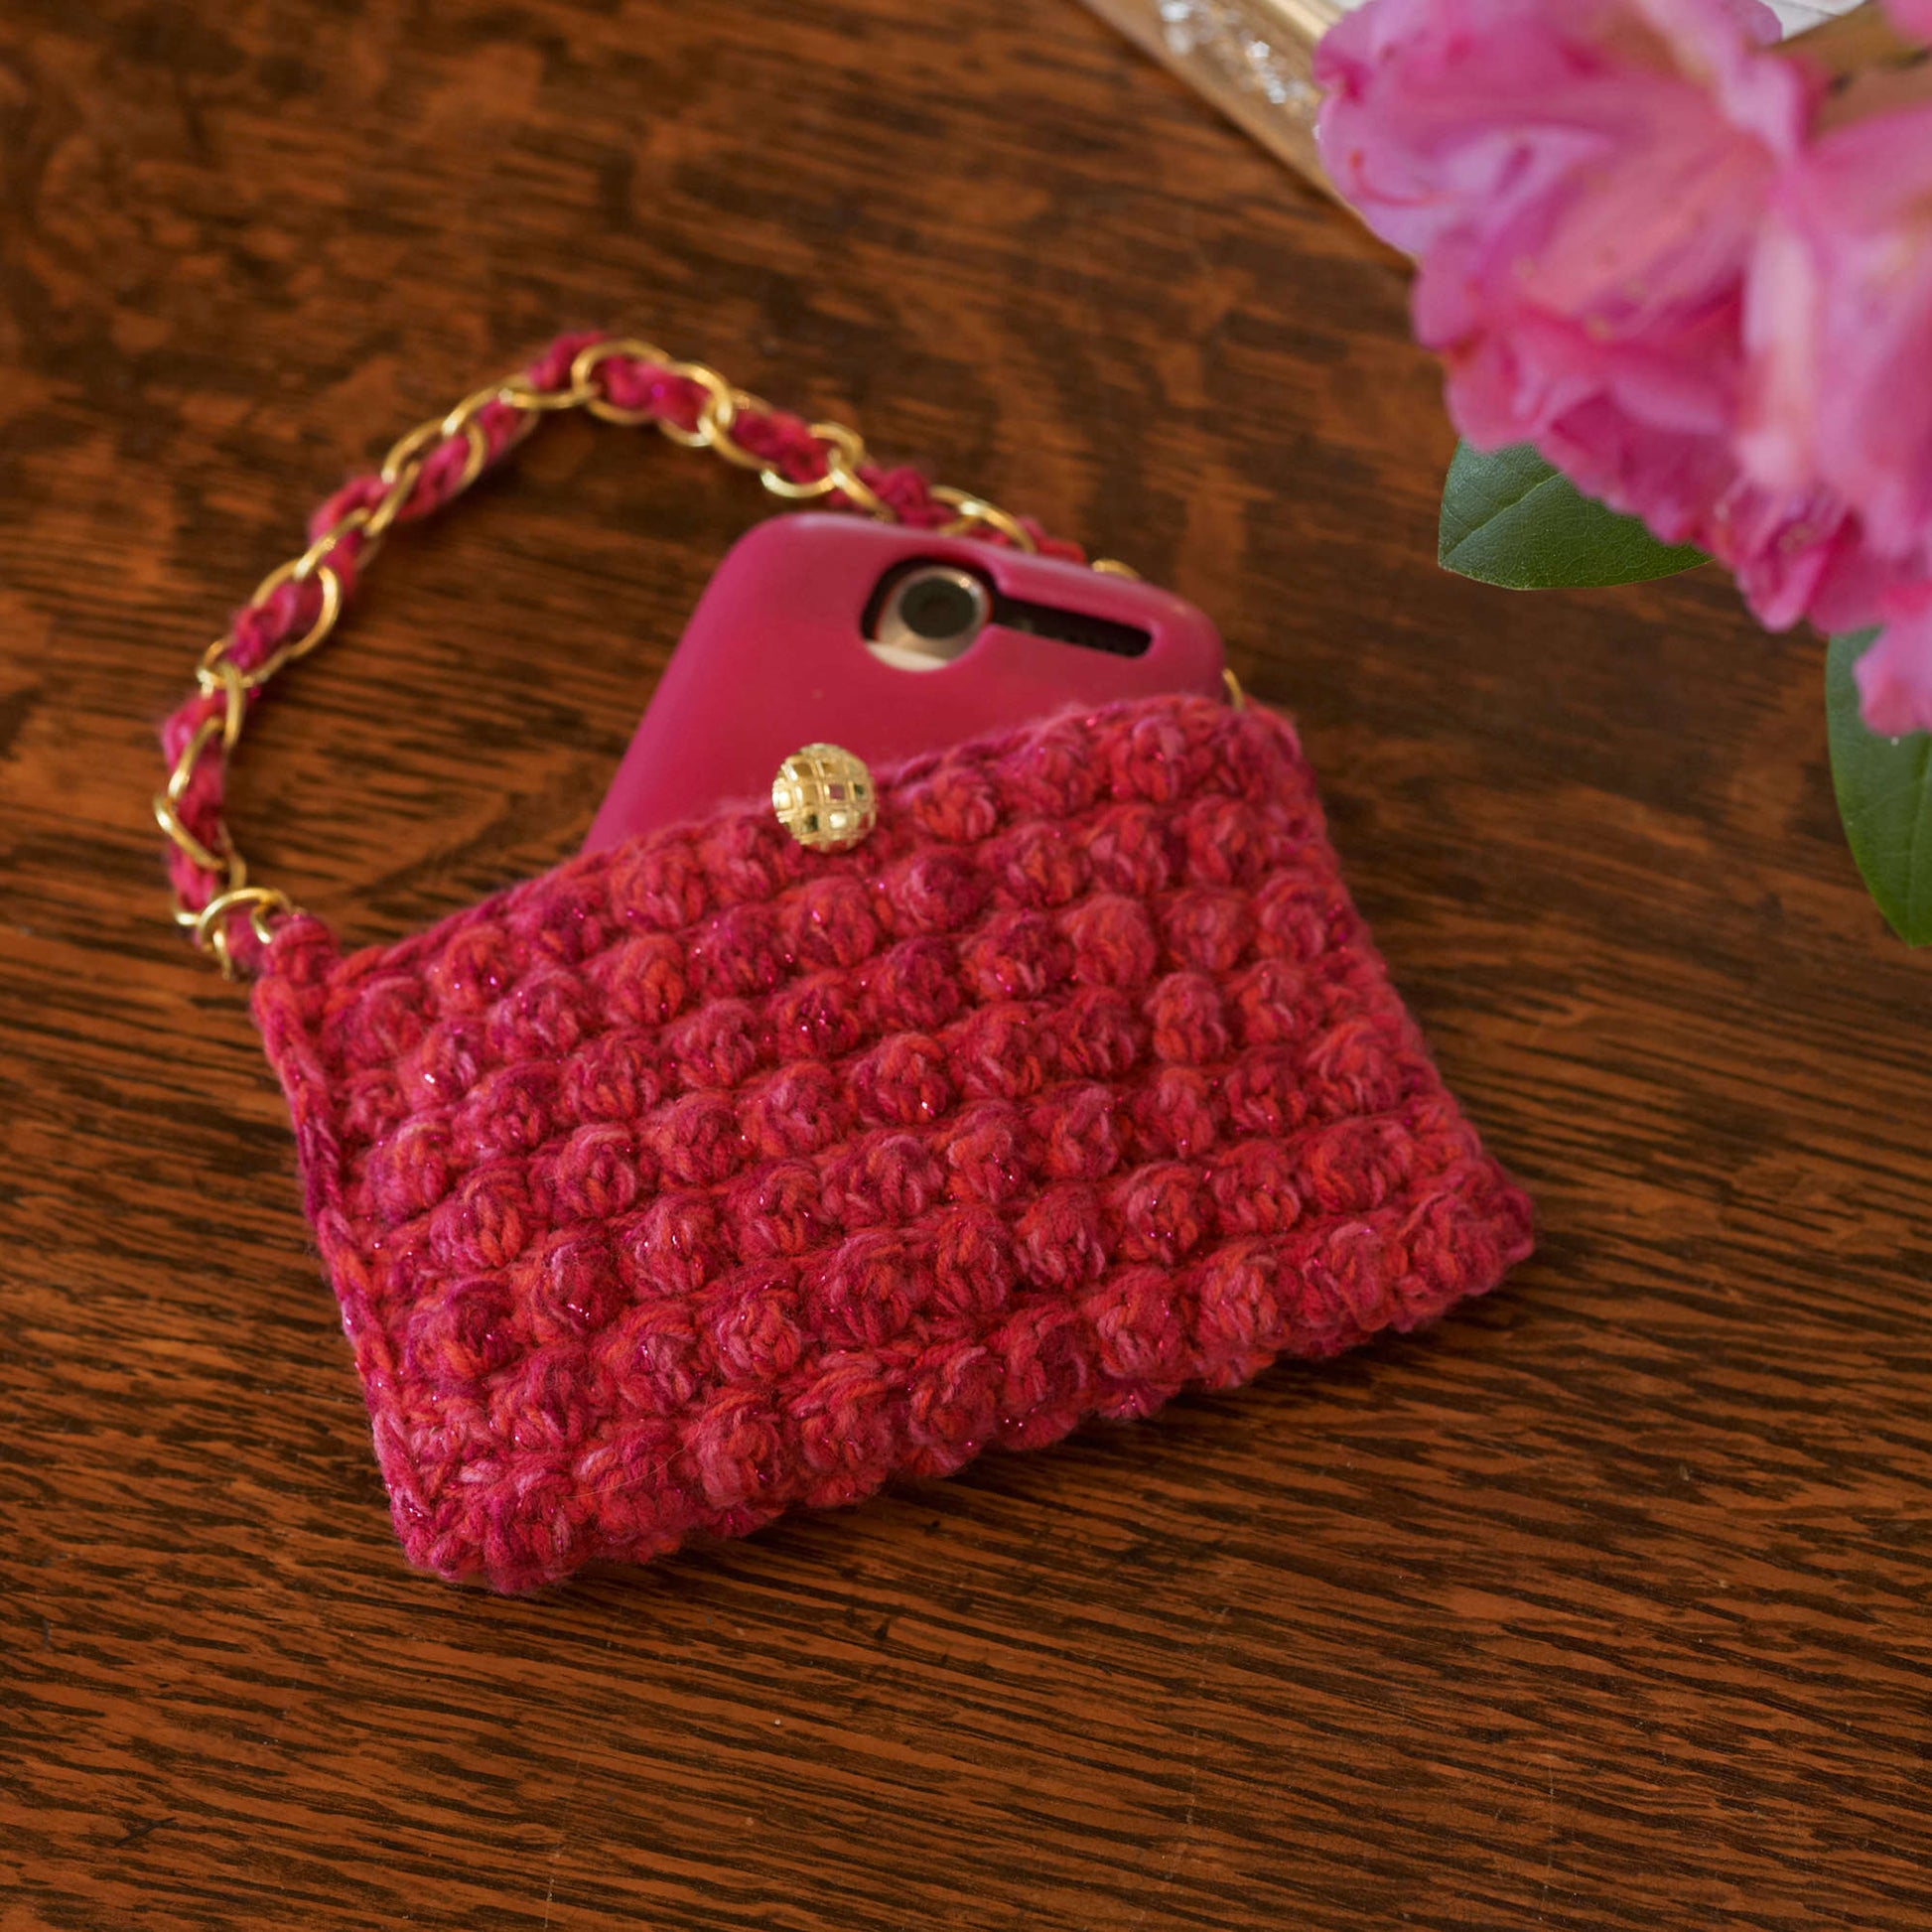 Free Red Heart Mobile Phone Baglet Crochet Pattern